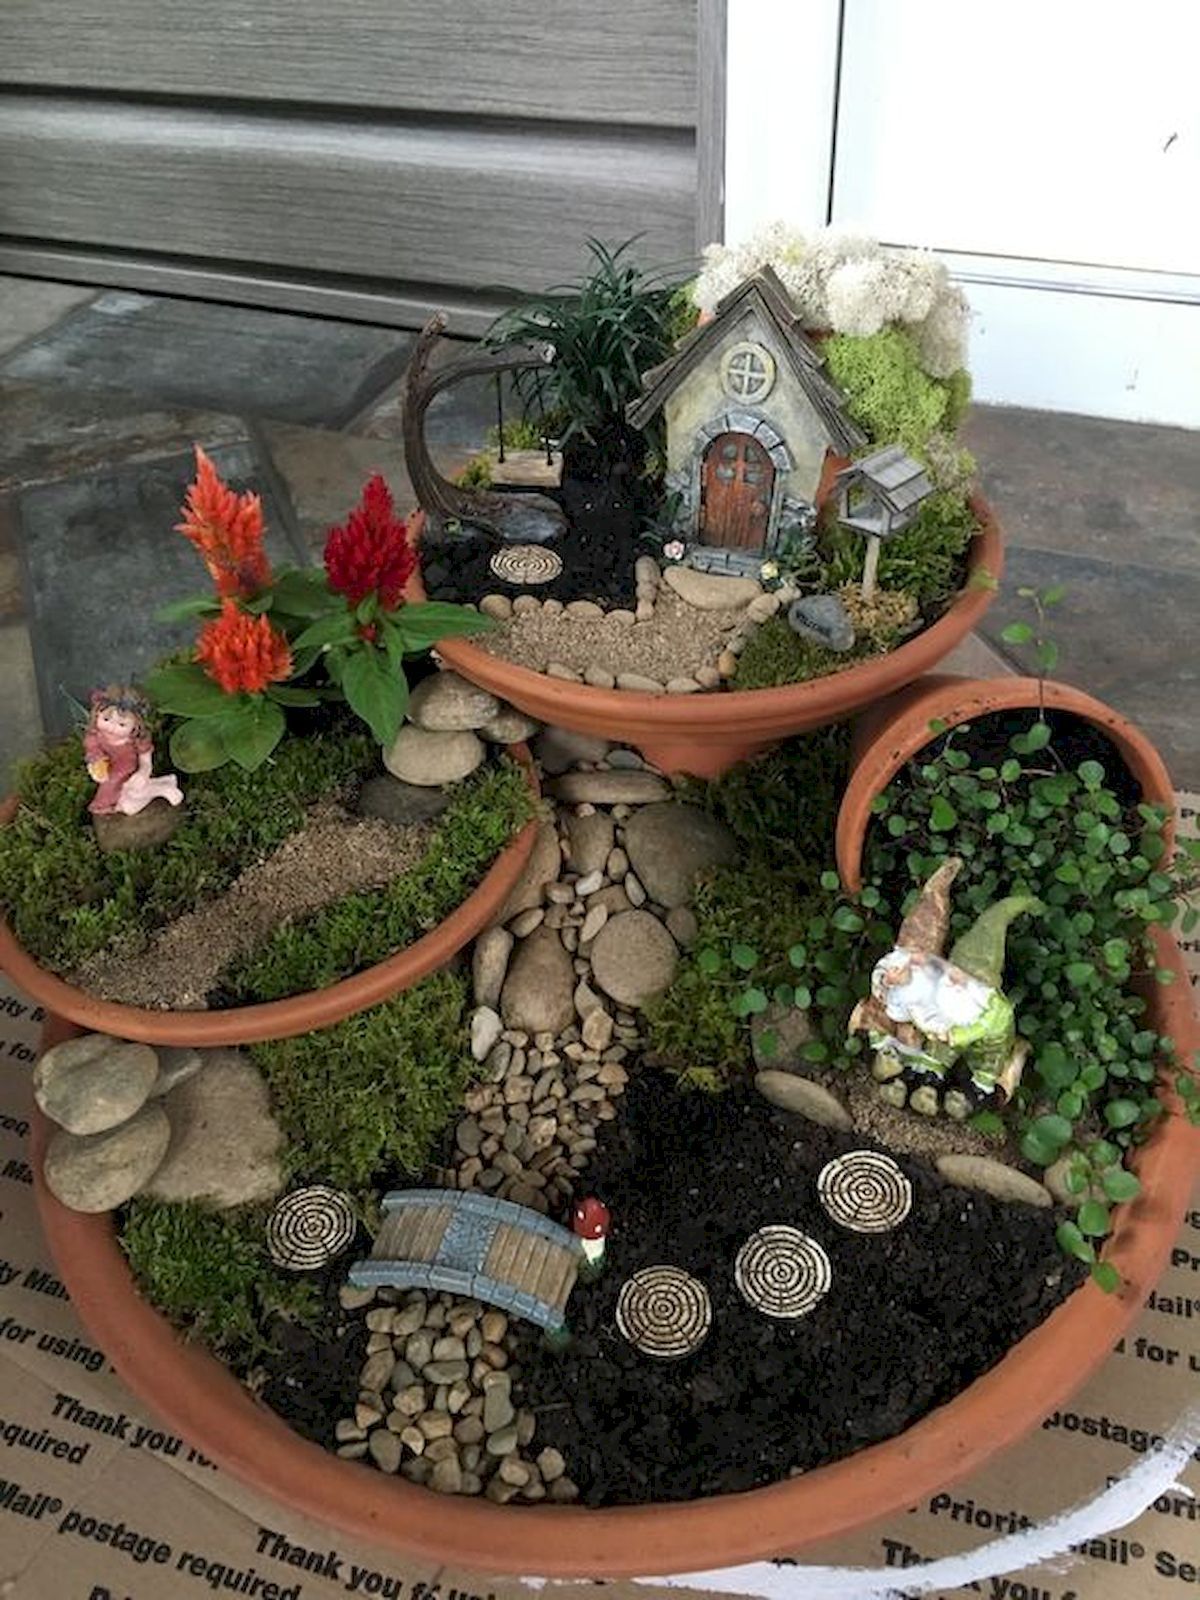 Awesome miniature fairy garden ideas